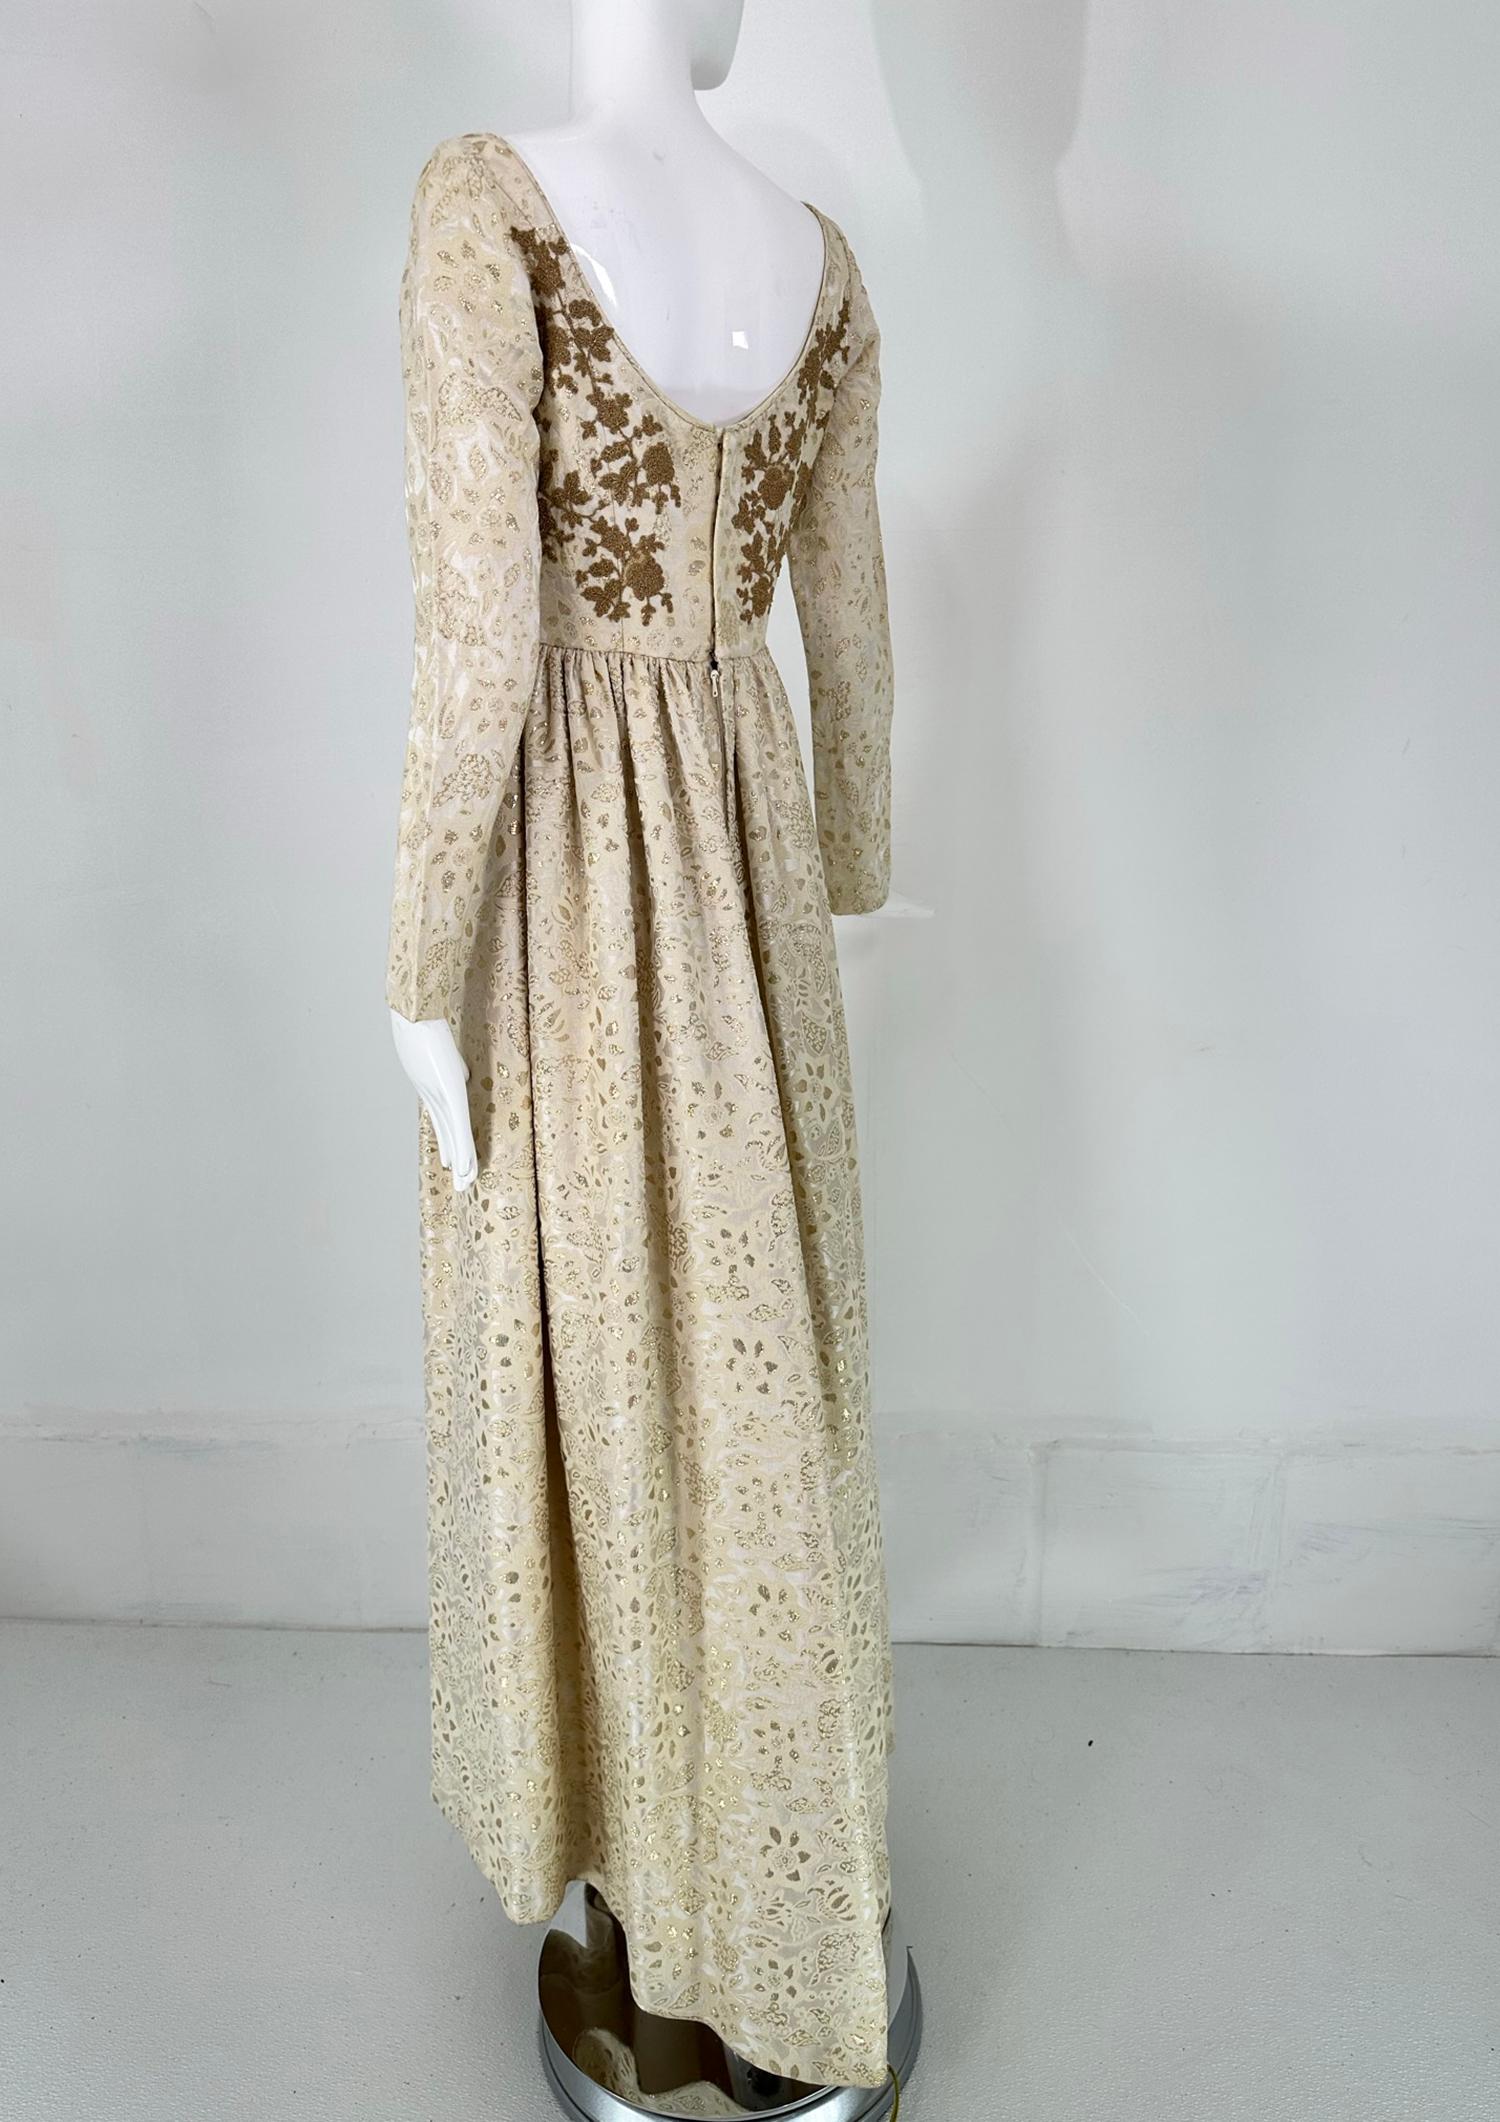 Galitizne Couture Renaissance Style Gown in Cream & Gold Metallic Brocade 1970s For Sale 5